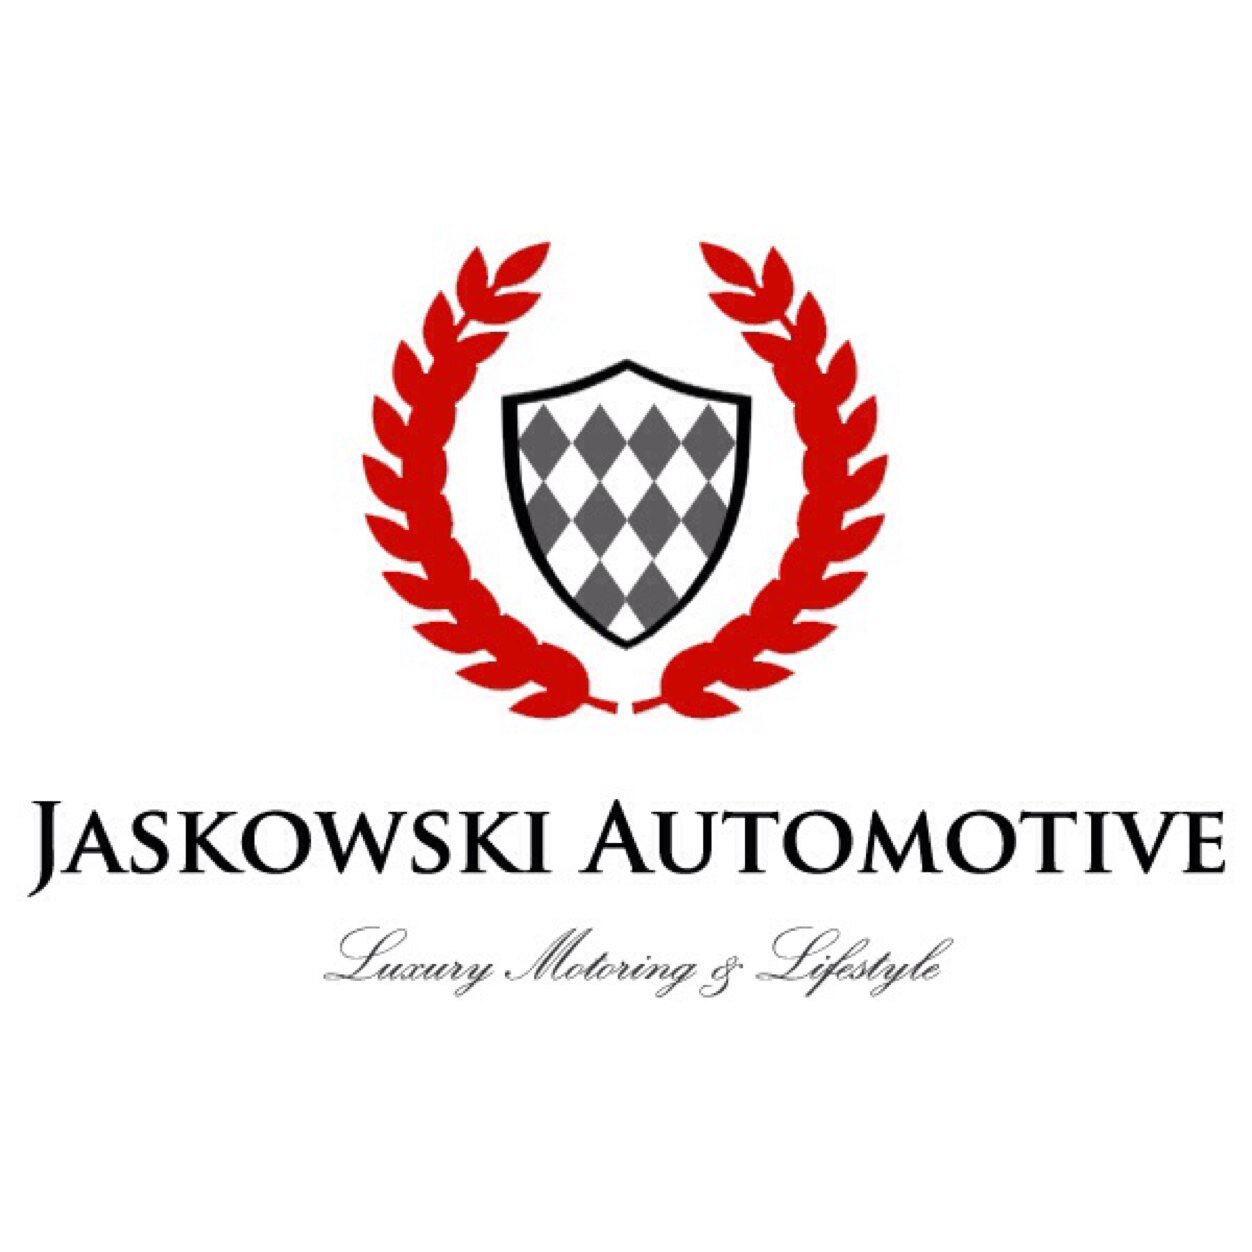 Jaskowski Automotive | Luxury Motoring & Lifestyle | Lifestyle, Articles, Classifieds, Blog, Events, Photographs & Videos | #JaskowskiAutomotive